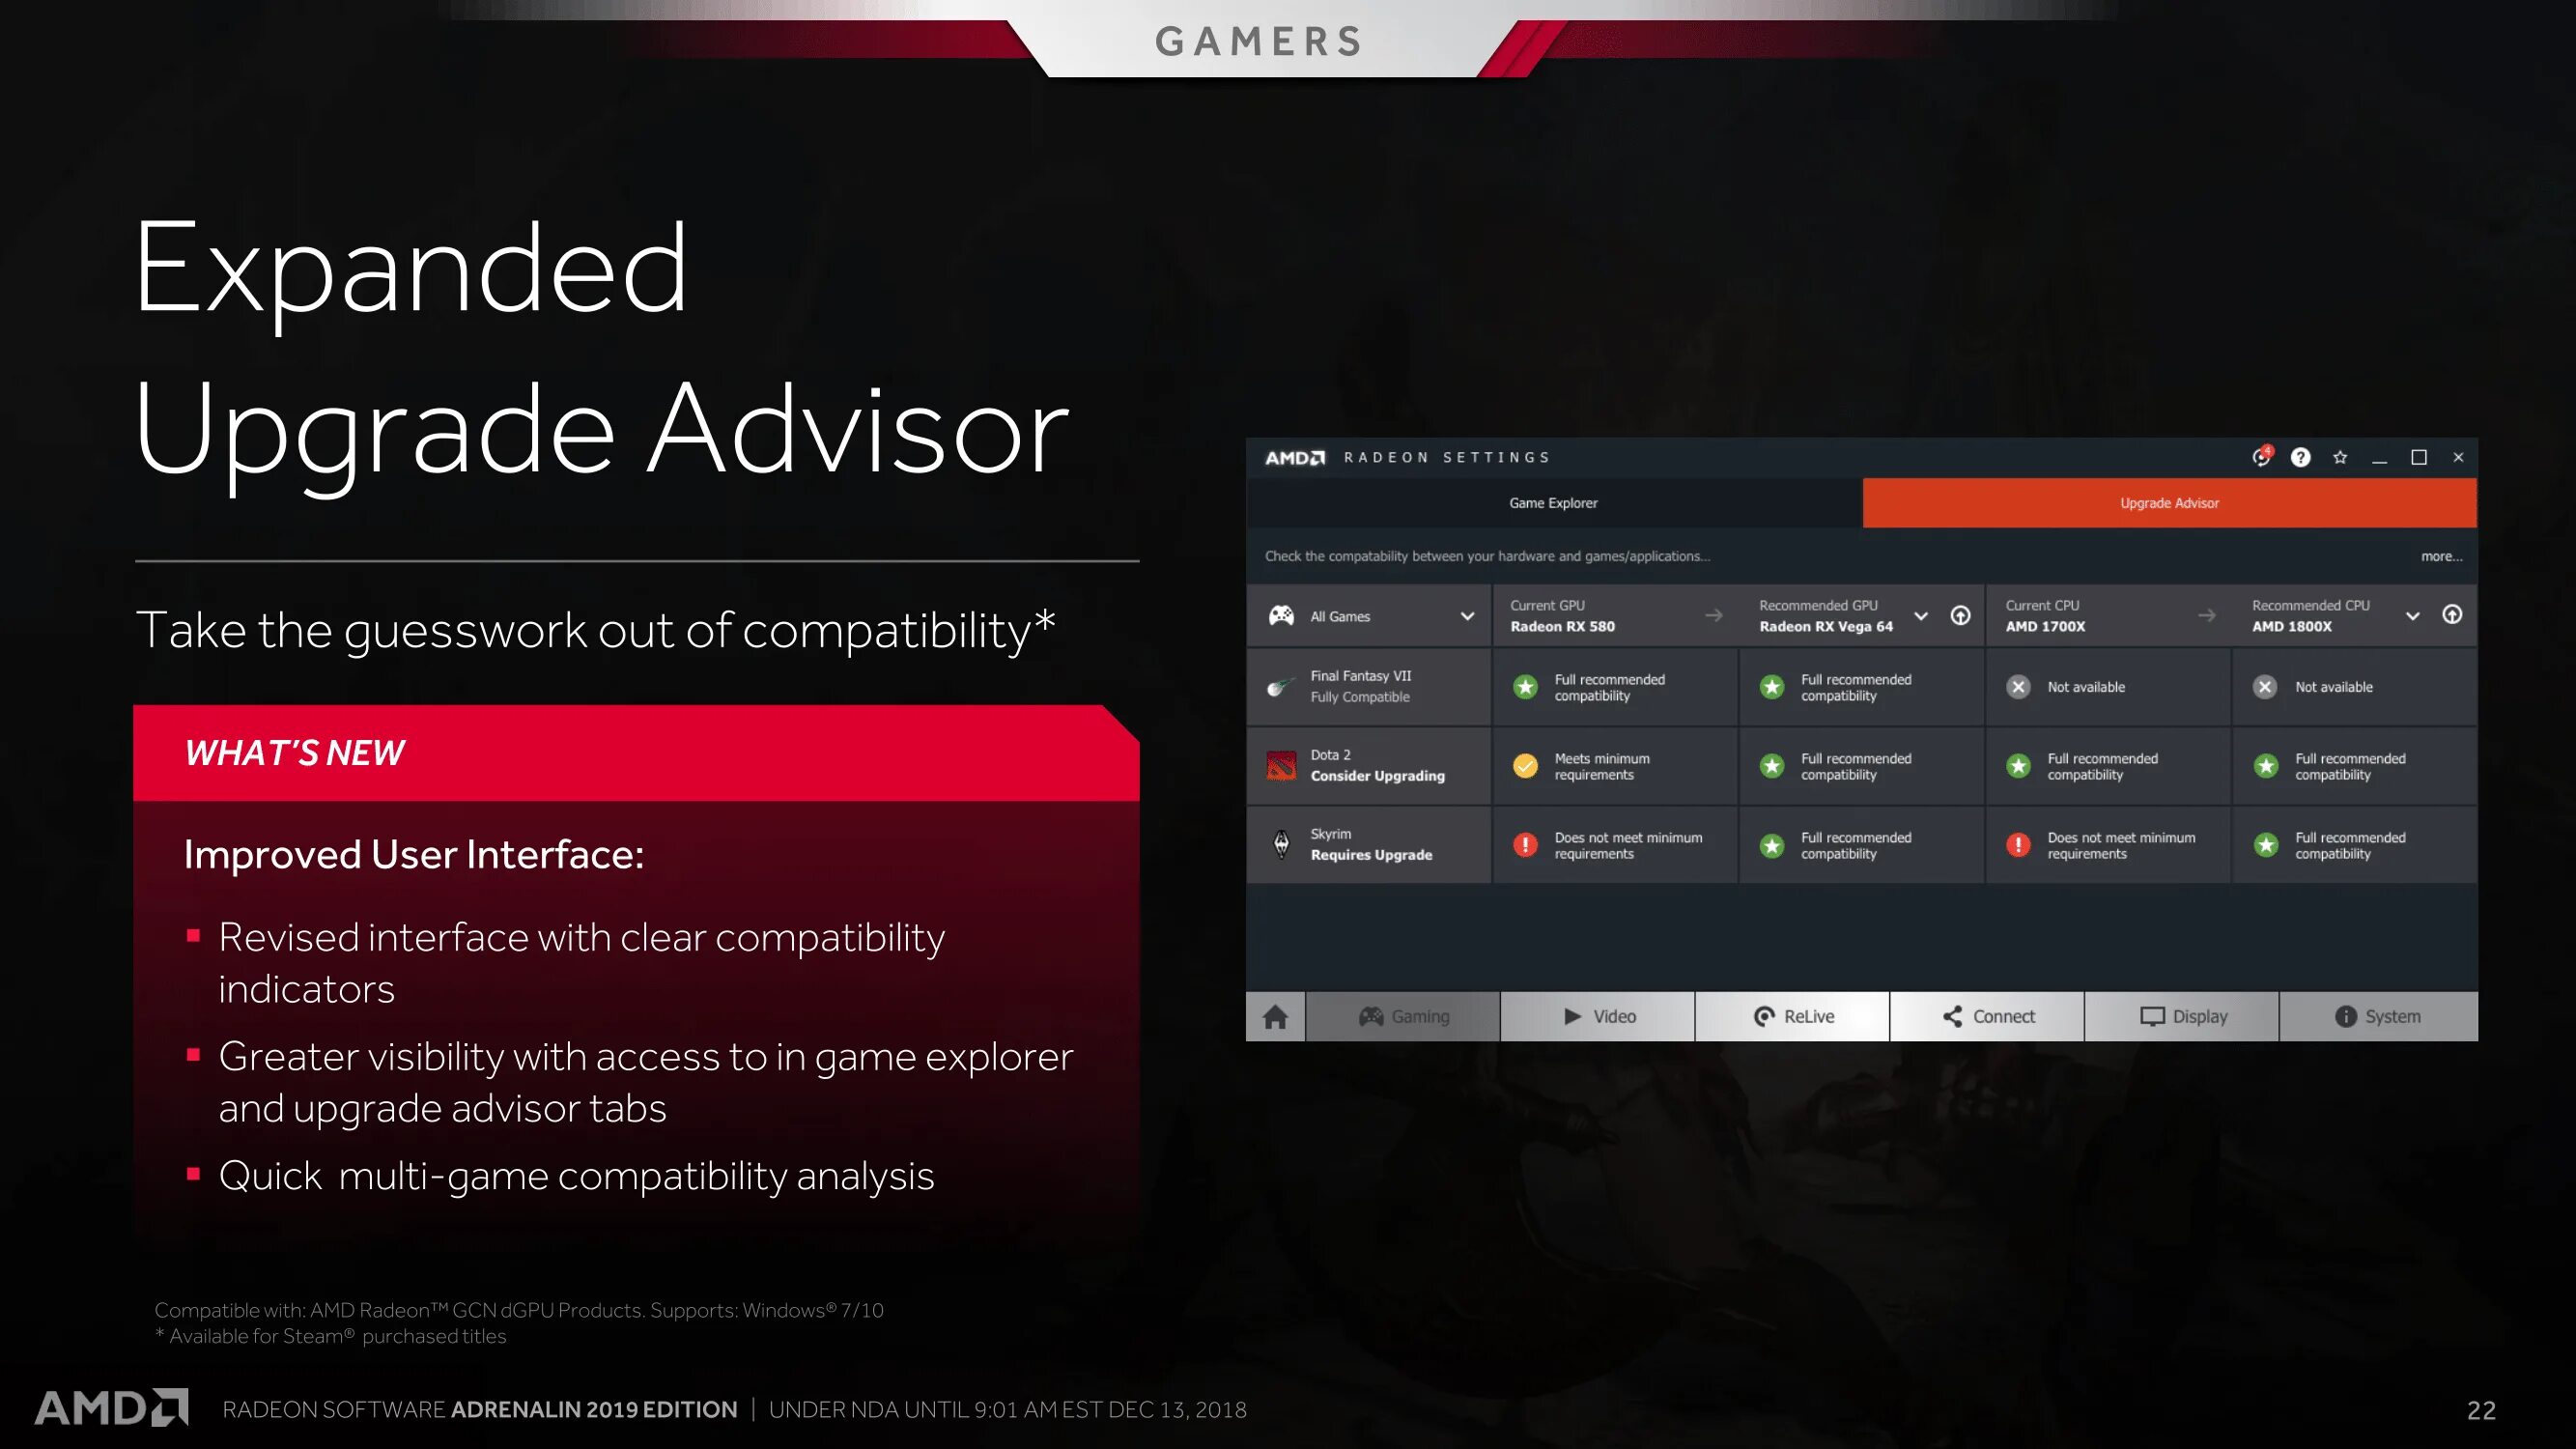 AMD Radeon Adrenalin. Radeon software Adrenalin. AMD Radeon Advisors. AMD Adrenalin Edition display. Adrenalin edition версии